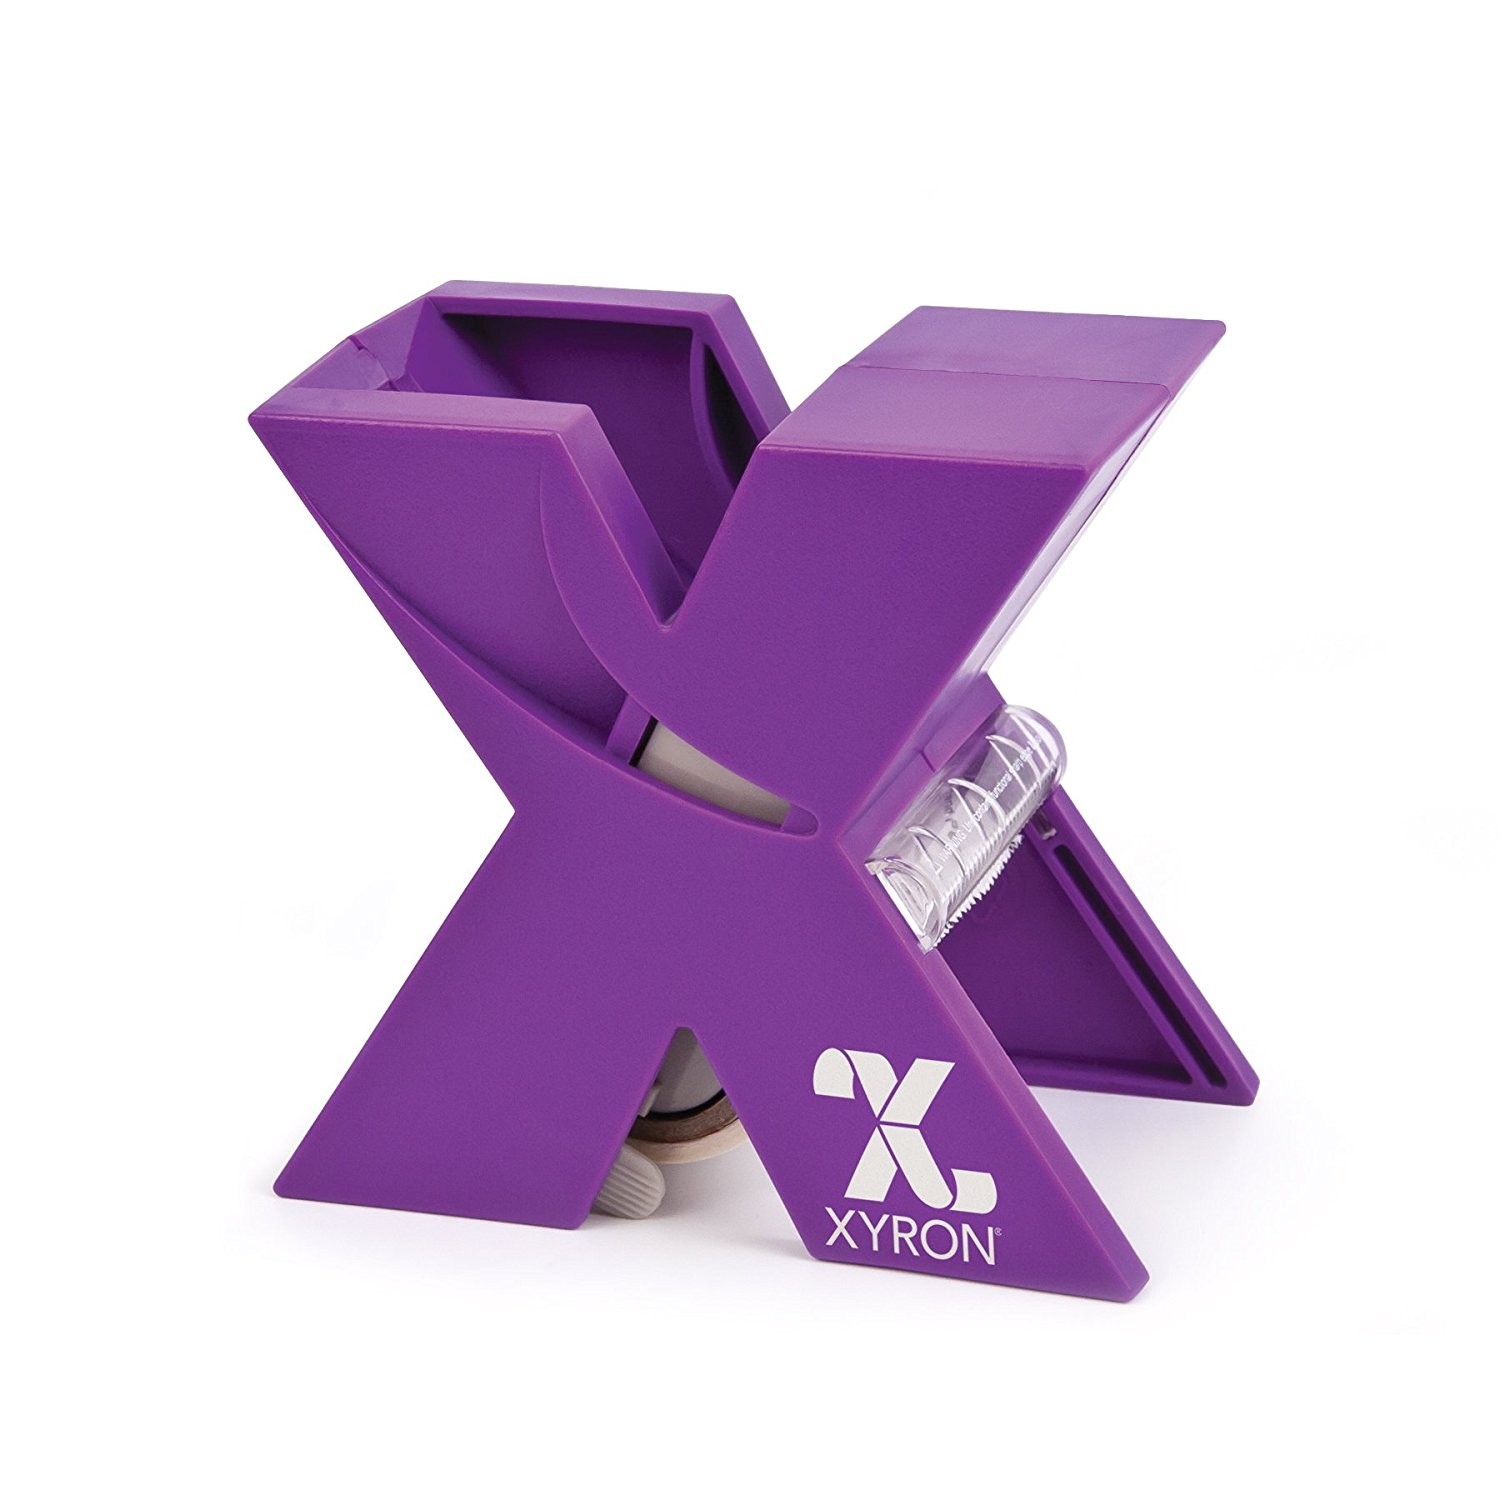 X 150 Sticker Maker Repositionable Permanent Adhesive Xyron Cartridge Refill 